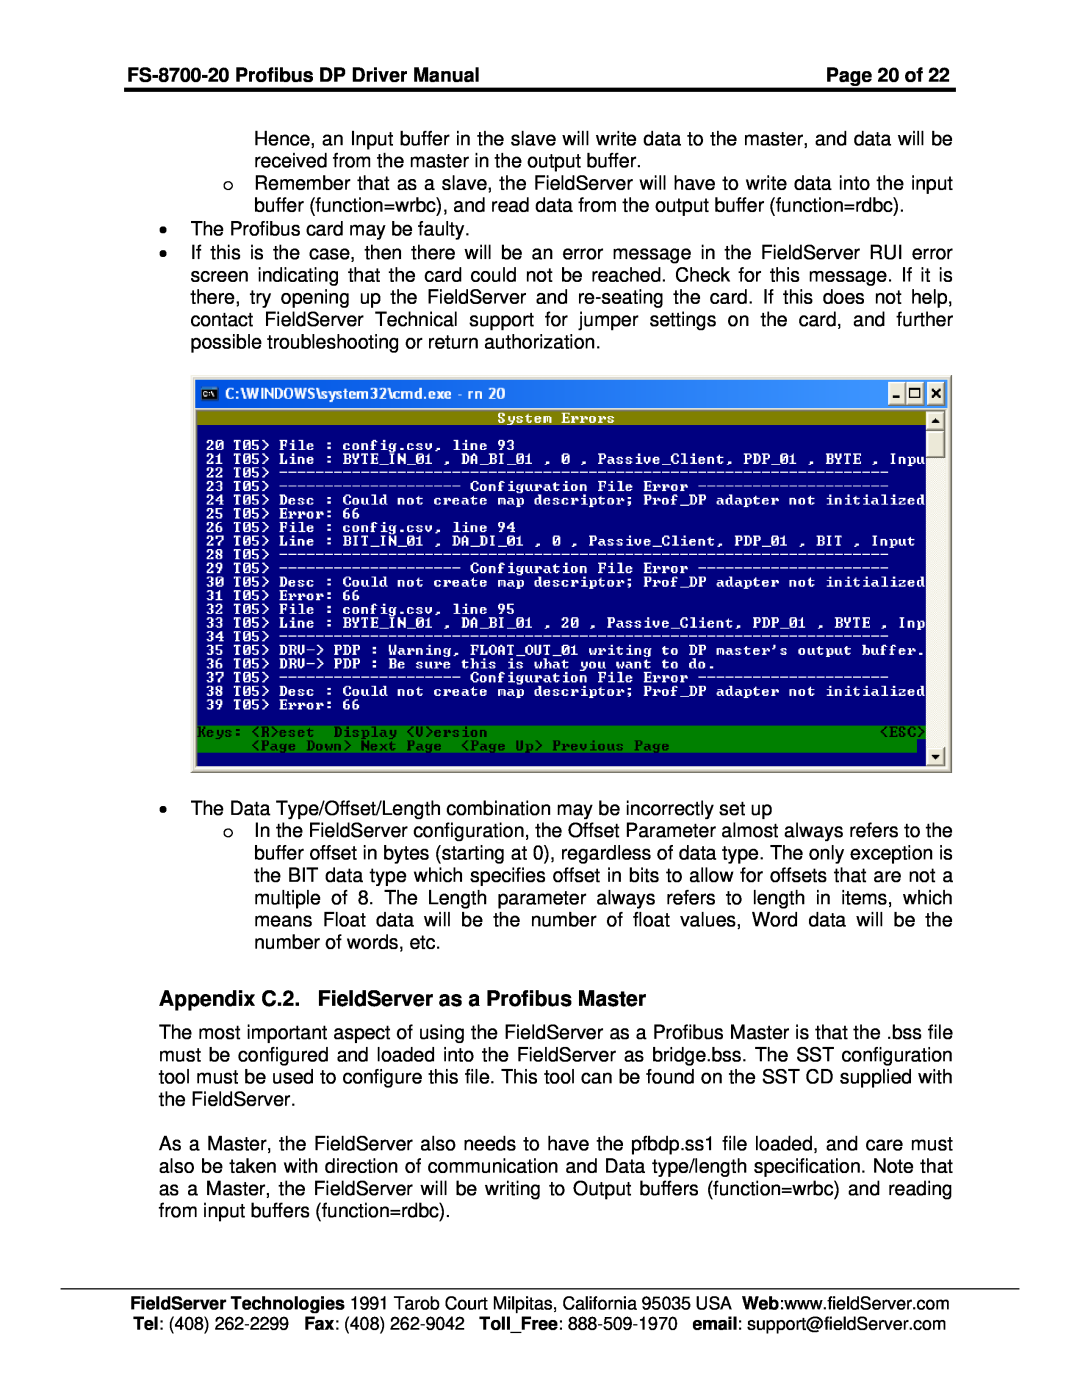 FieldServer FS-8700-20 instruction manual Appendix C.2. FieldServer as a Profibus Master 